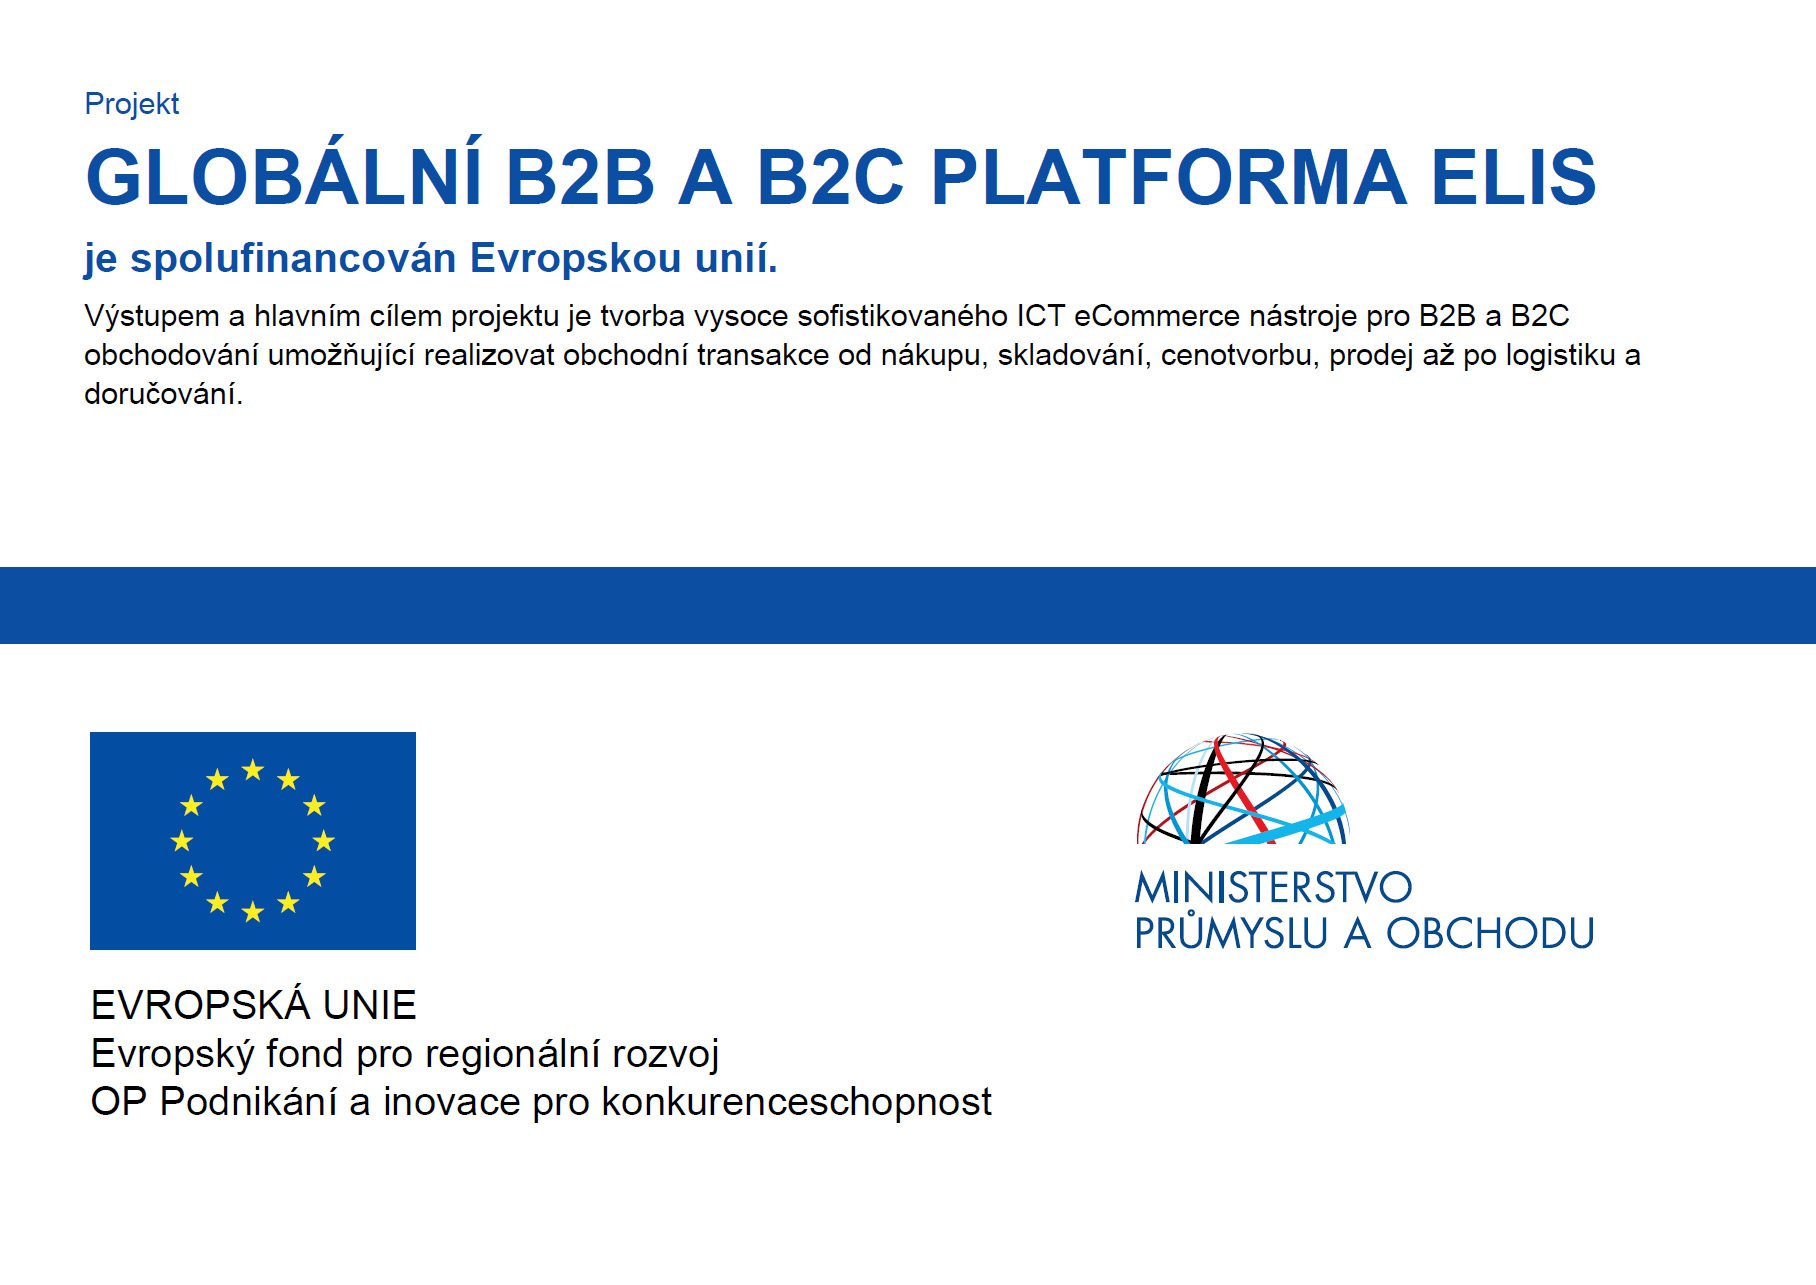 Global B2B and B2C platform ELIS